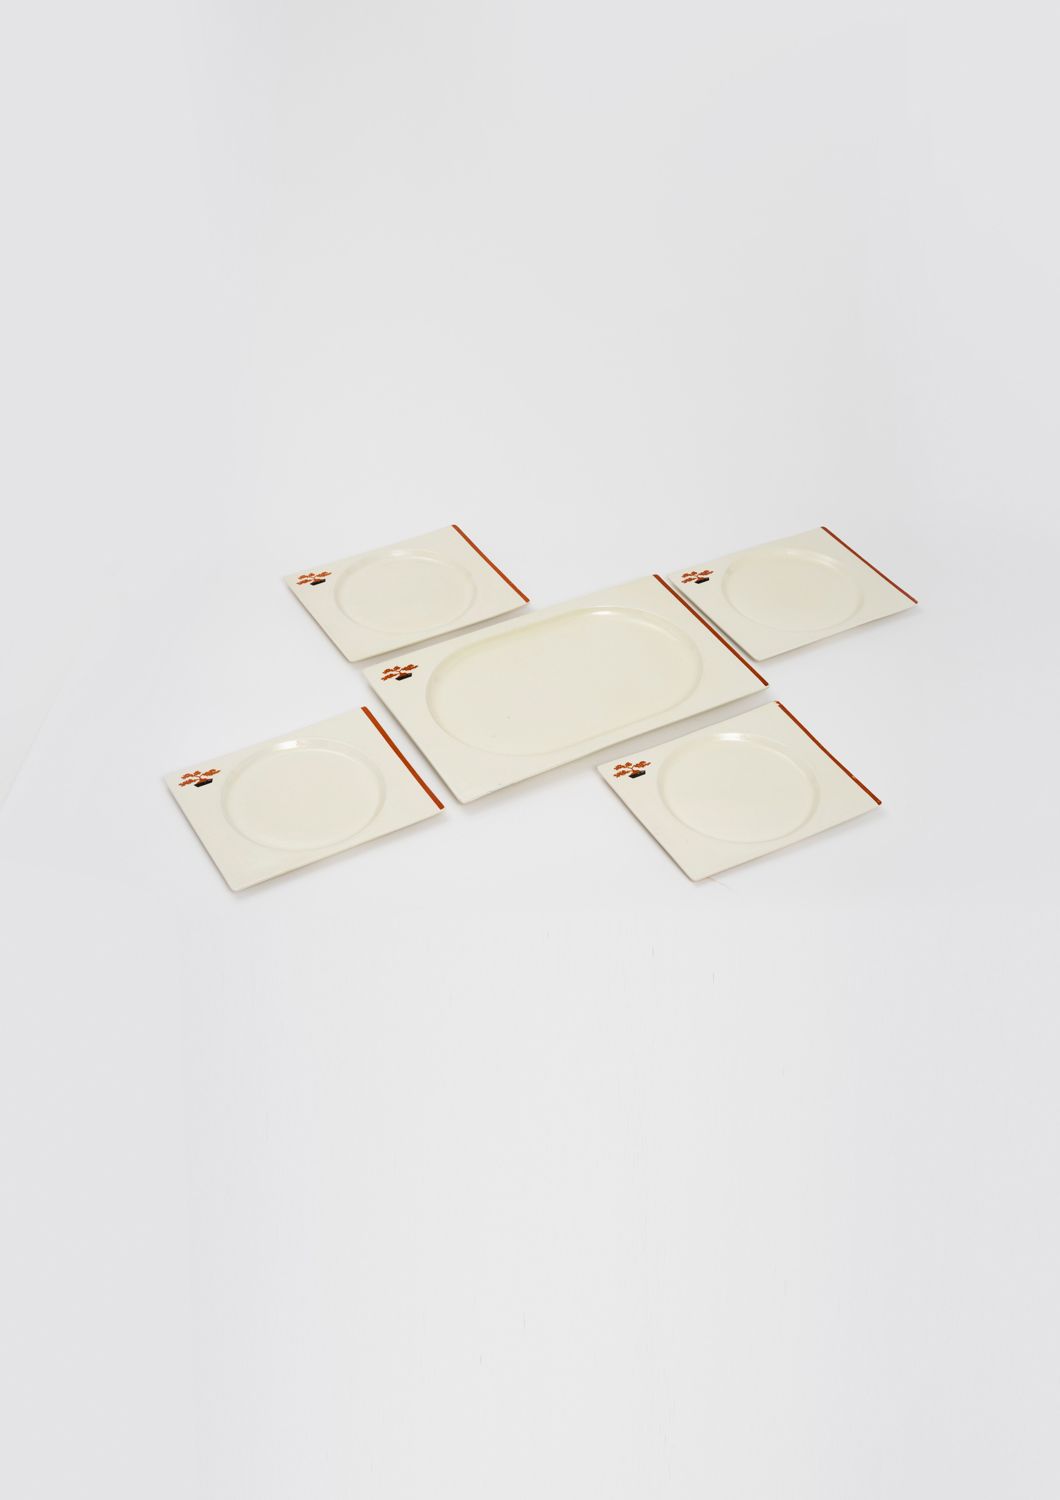 Null 让-卢斯(1895-1964) 
米白色釉陶晚餐服务，包括1个大盘子和4个盘子，长方形的边缘有一个橙色的边框，装饰着一棵盆景树。背面有艺术家的字样。 &hellip;